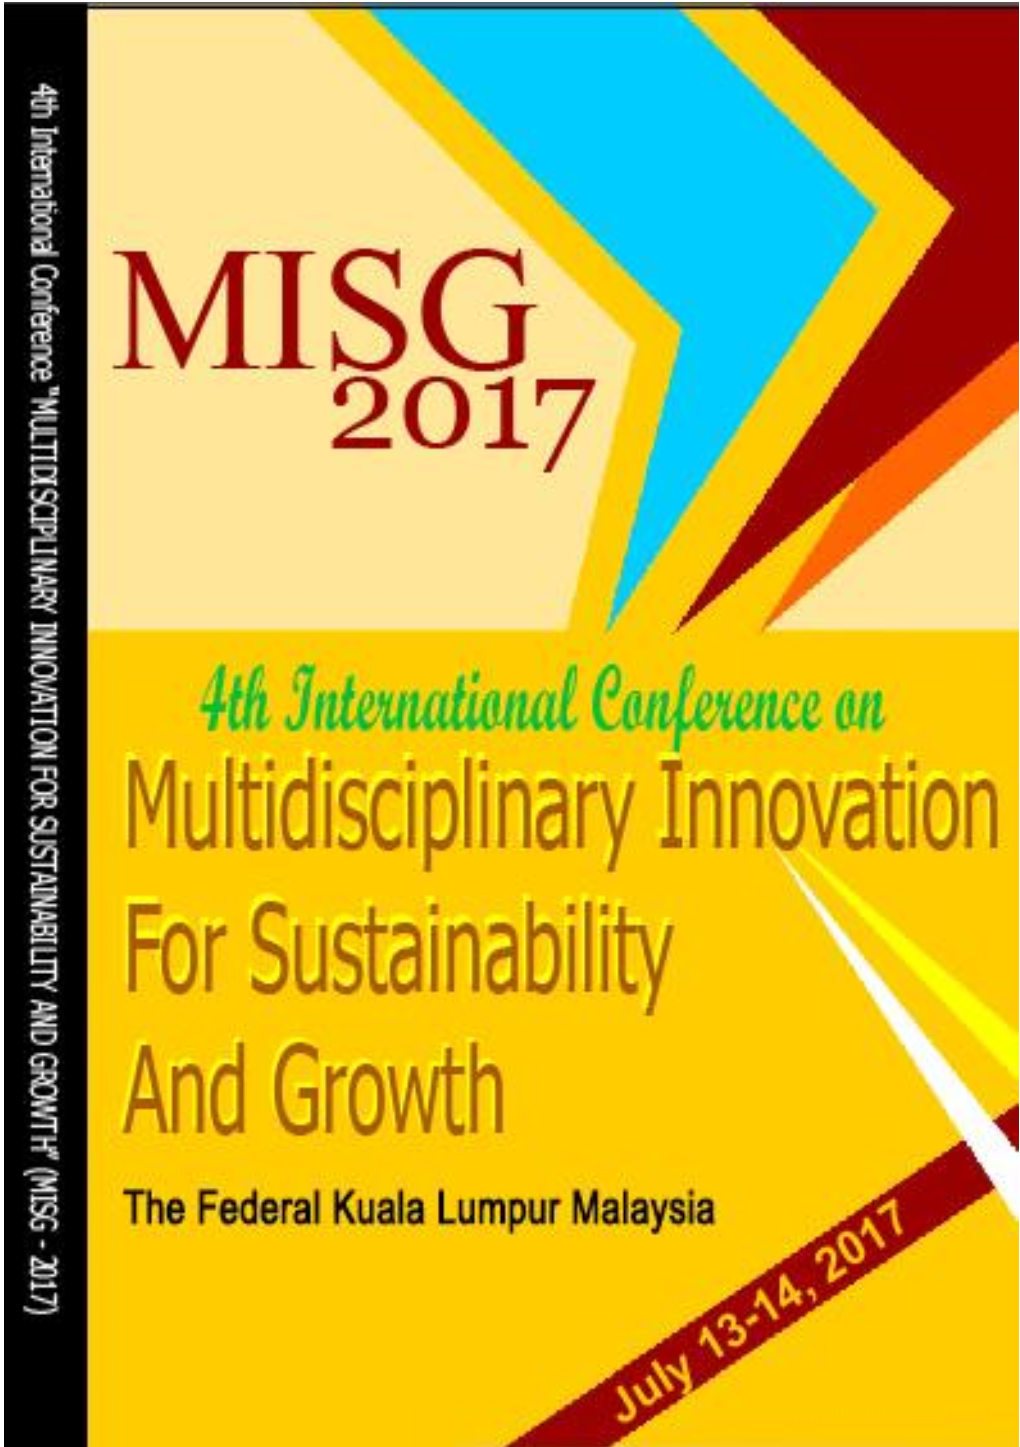 MISG 2017 Abstract Proceeding